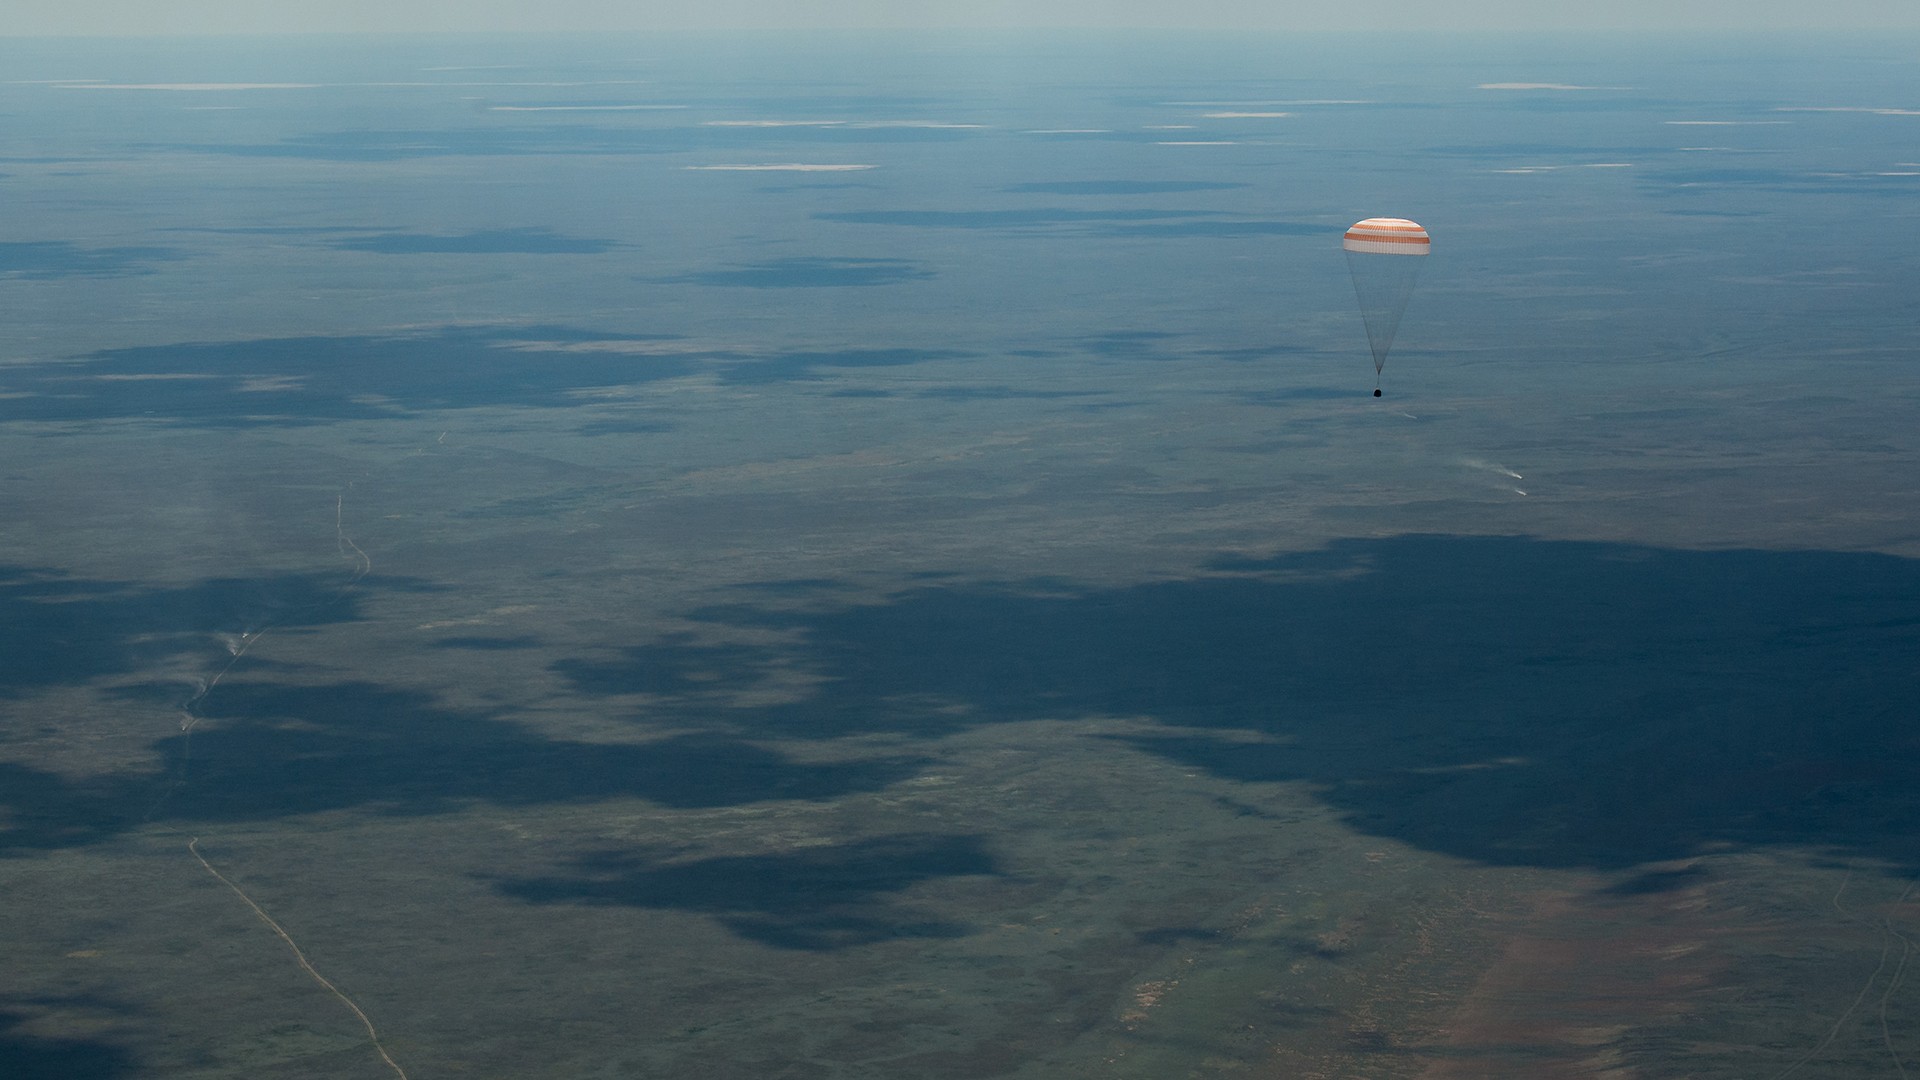 General 1920x1080 Roscosmos NASA Soyuz parachutes landscape